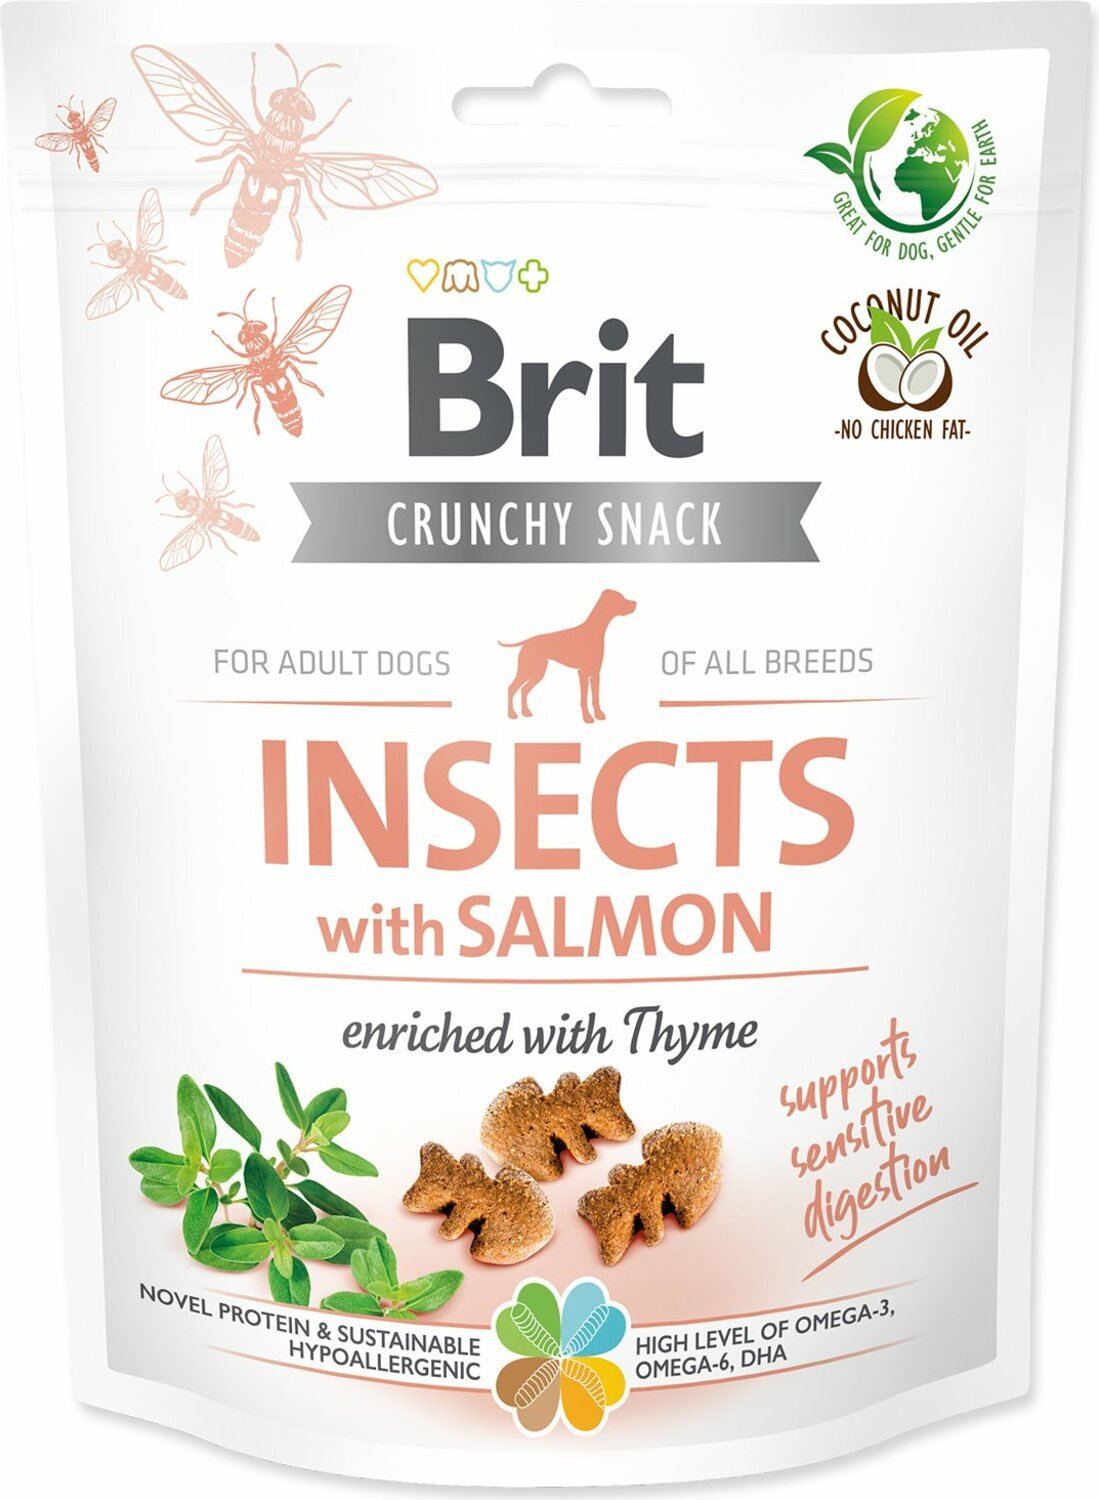 Pochoutka Brit Care Dog Crunchy Cracker Insocts, losos s tymiánem 200g